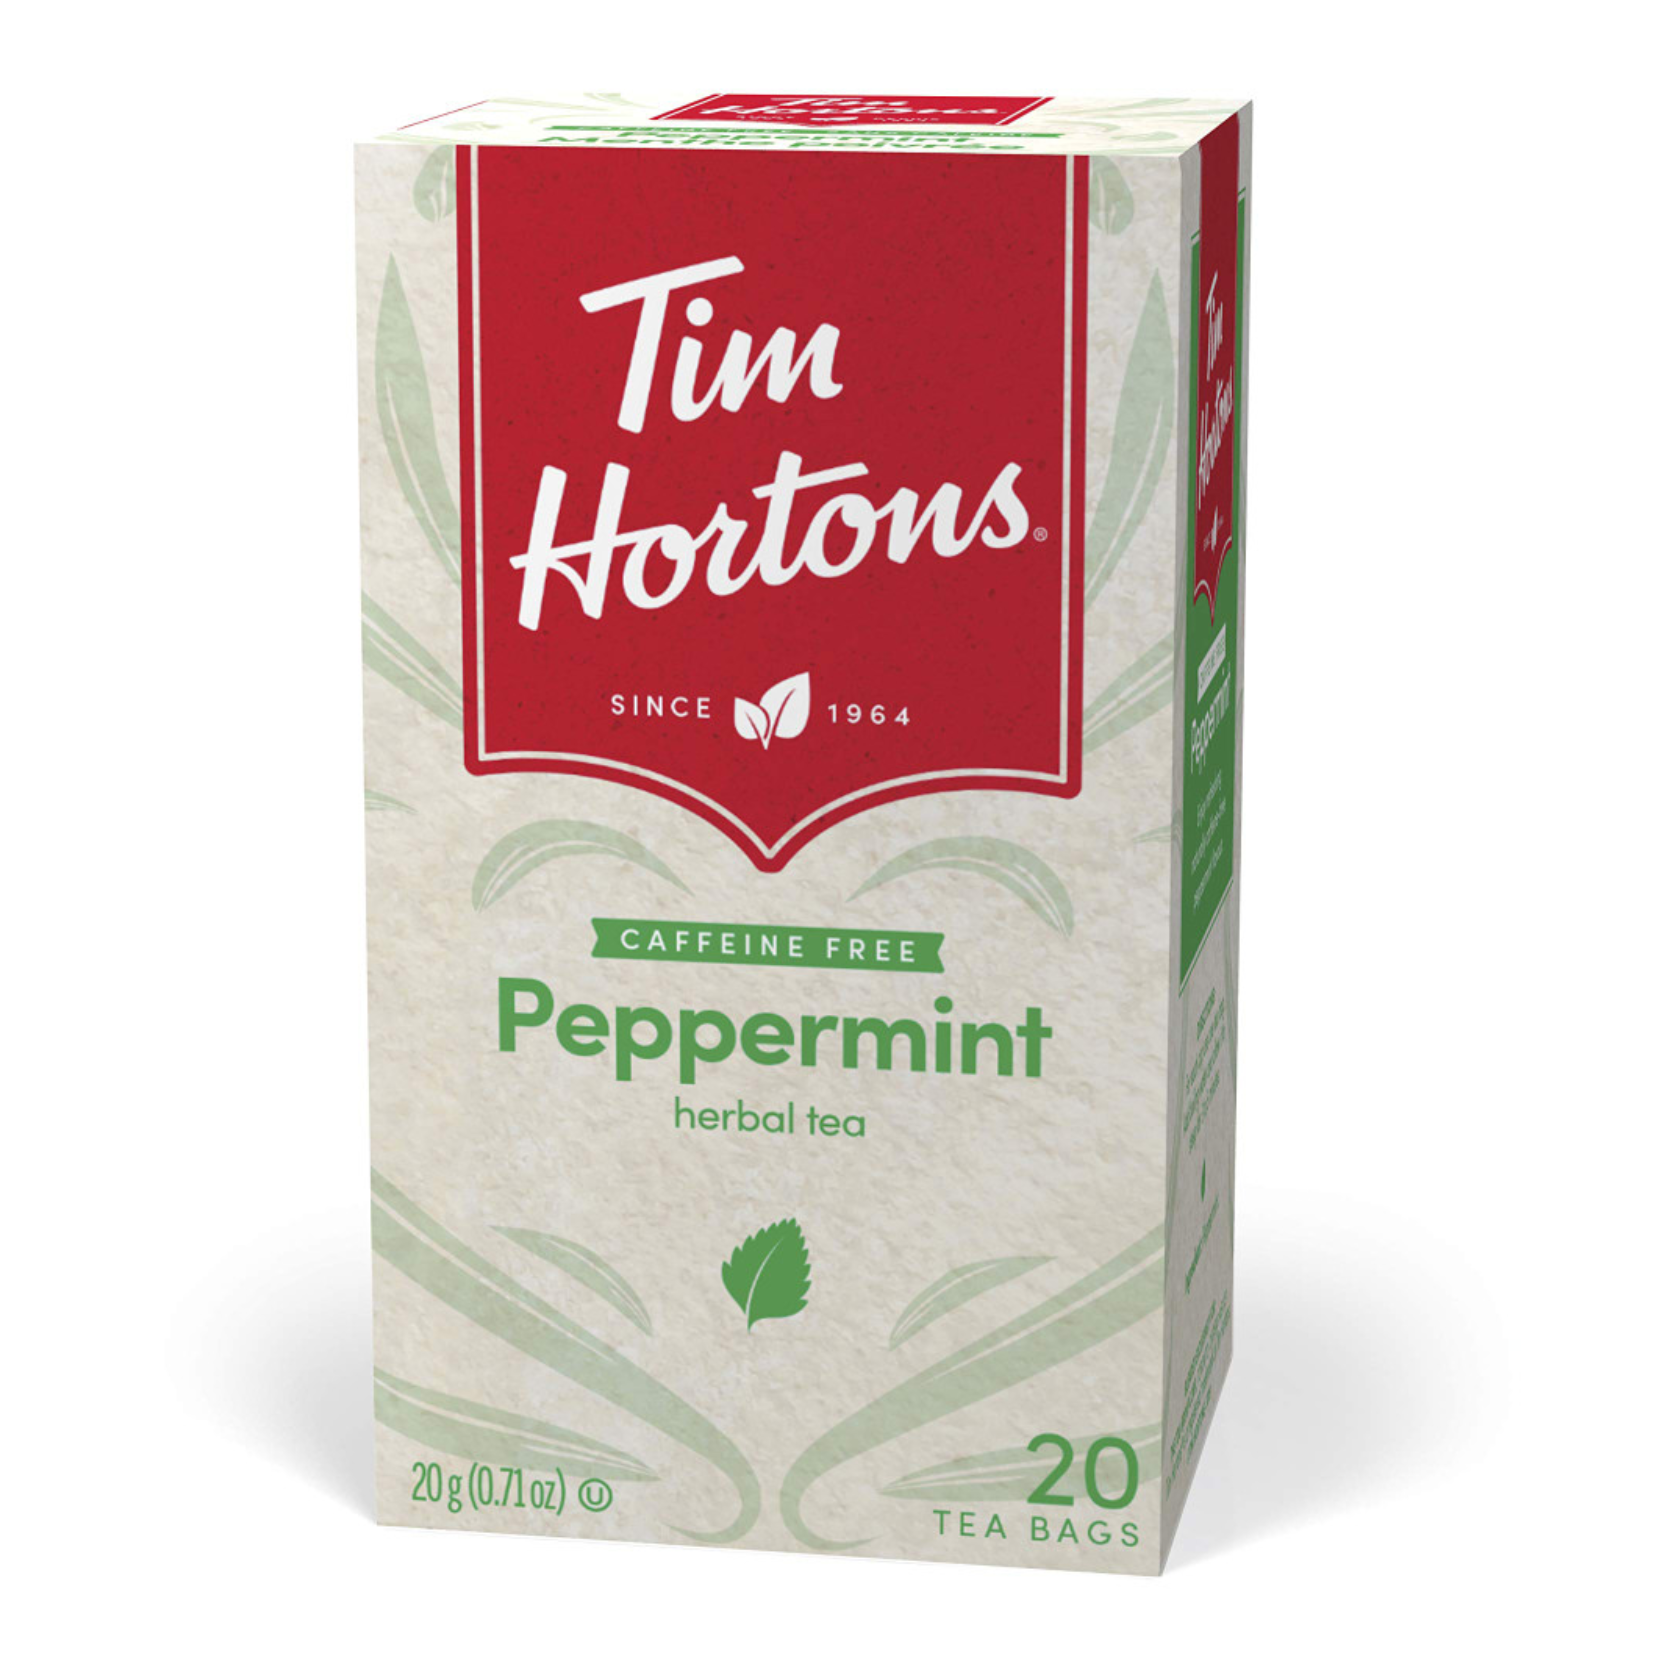 Tim Hortons Peppermint Tea 20ct